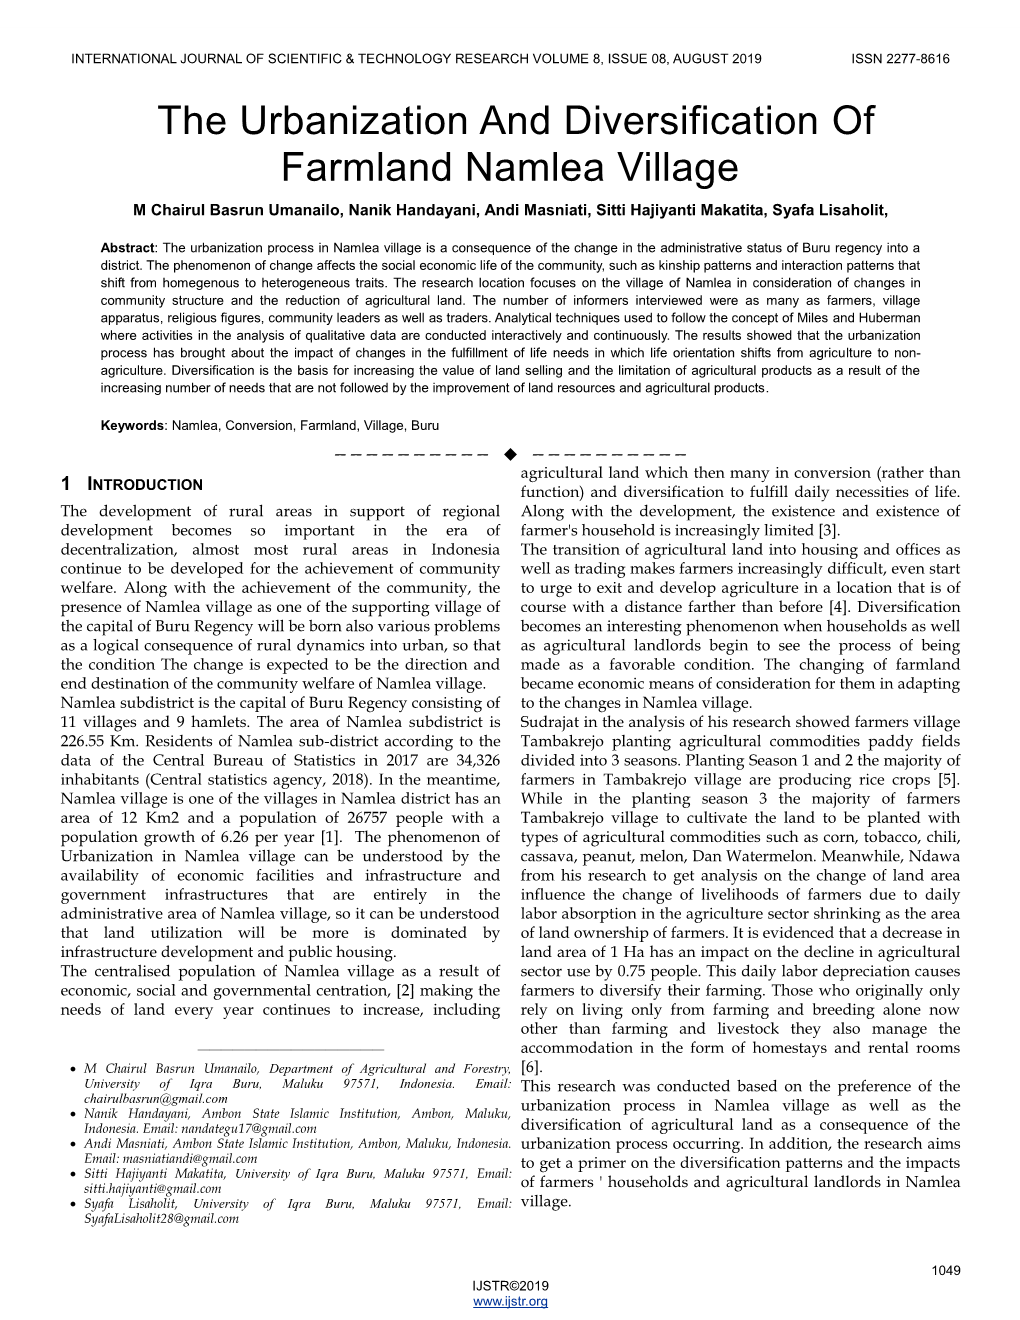 The Urbanization and Diversification of Farmland Namlea Village M Chairul Basrun Umanailo, Nanik Handayani, Andi Masniati, Sitti Hajiyanti Makatita, Syafa Lisaholit